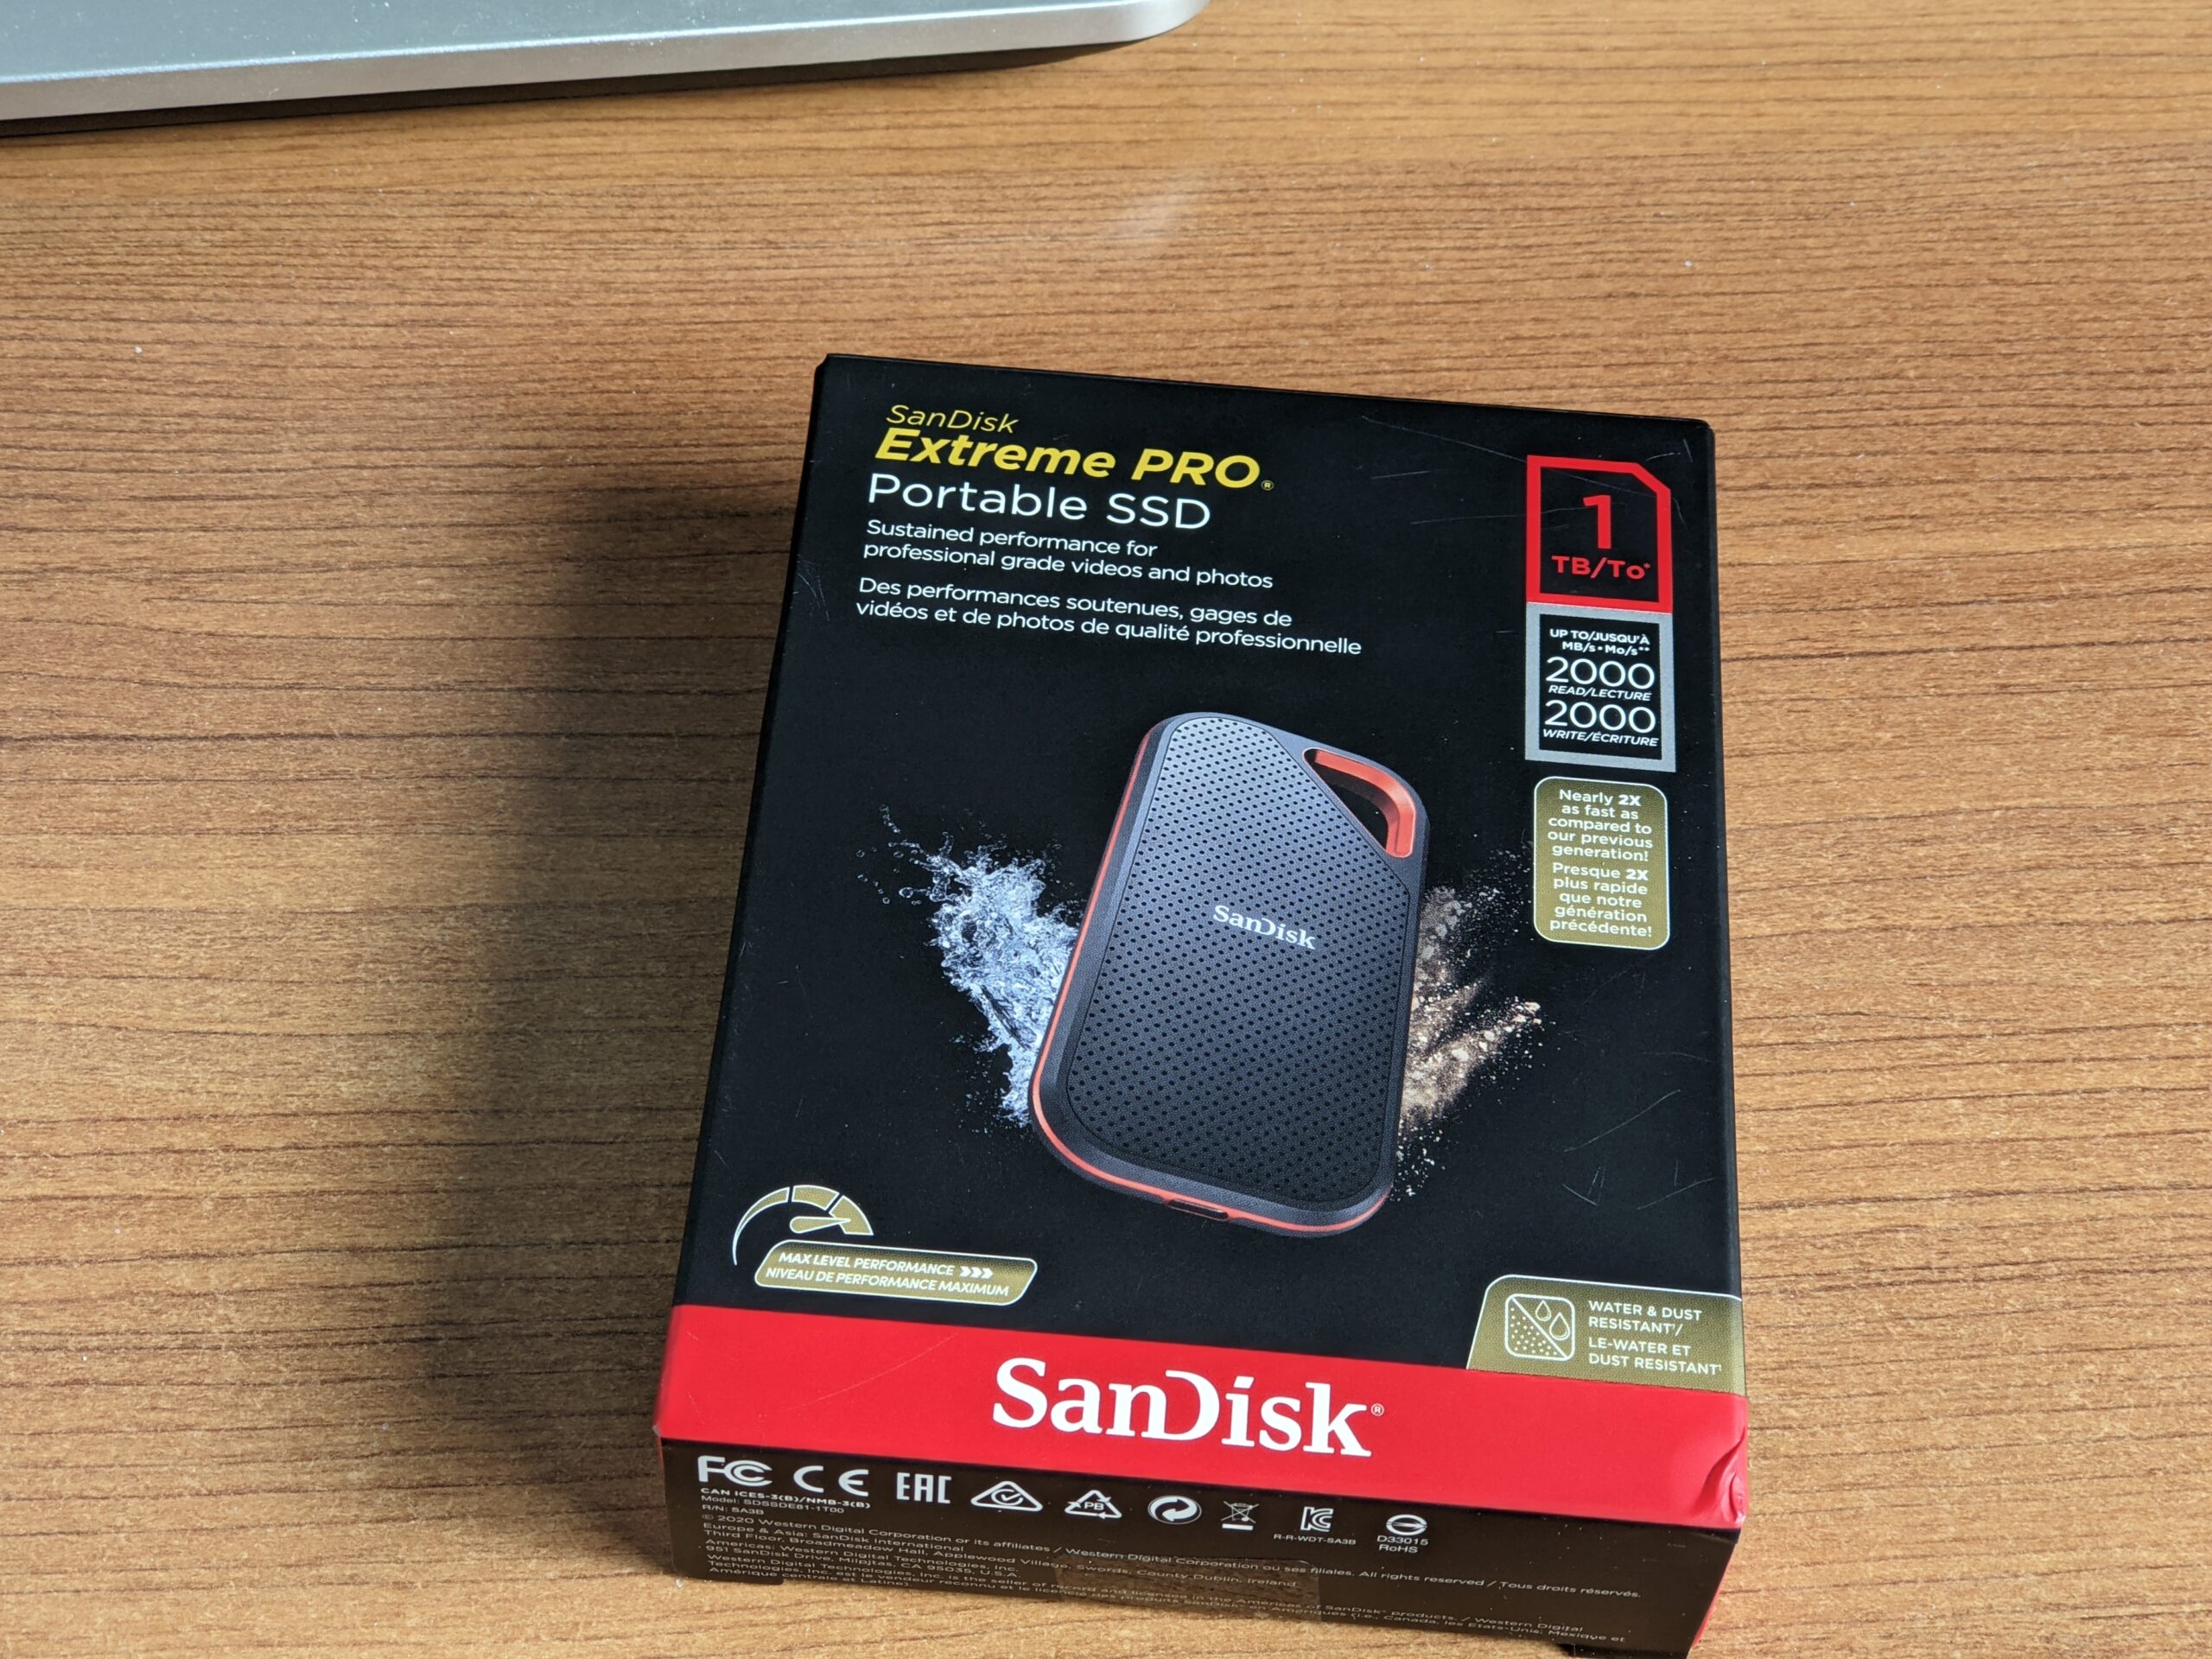 SanDisk Extreme PRO portable SSD